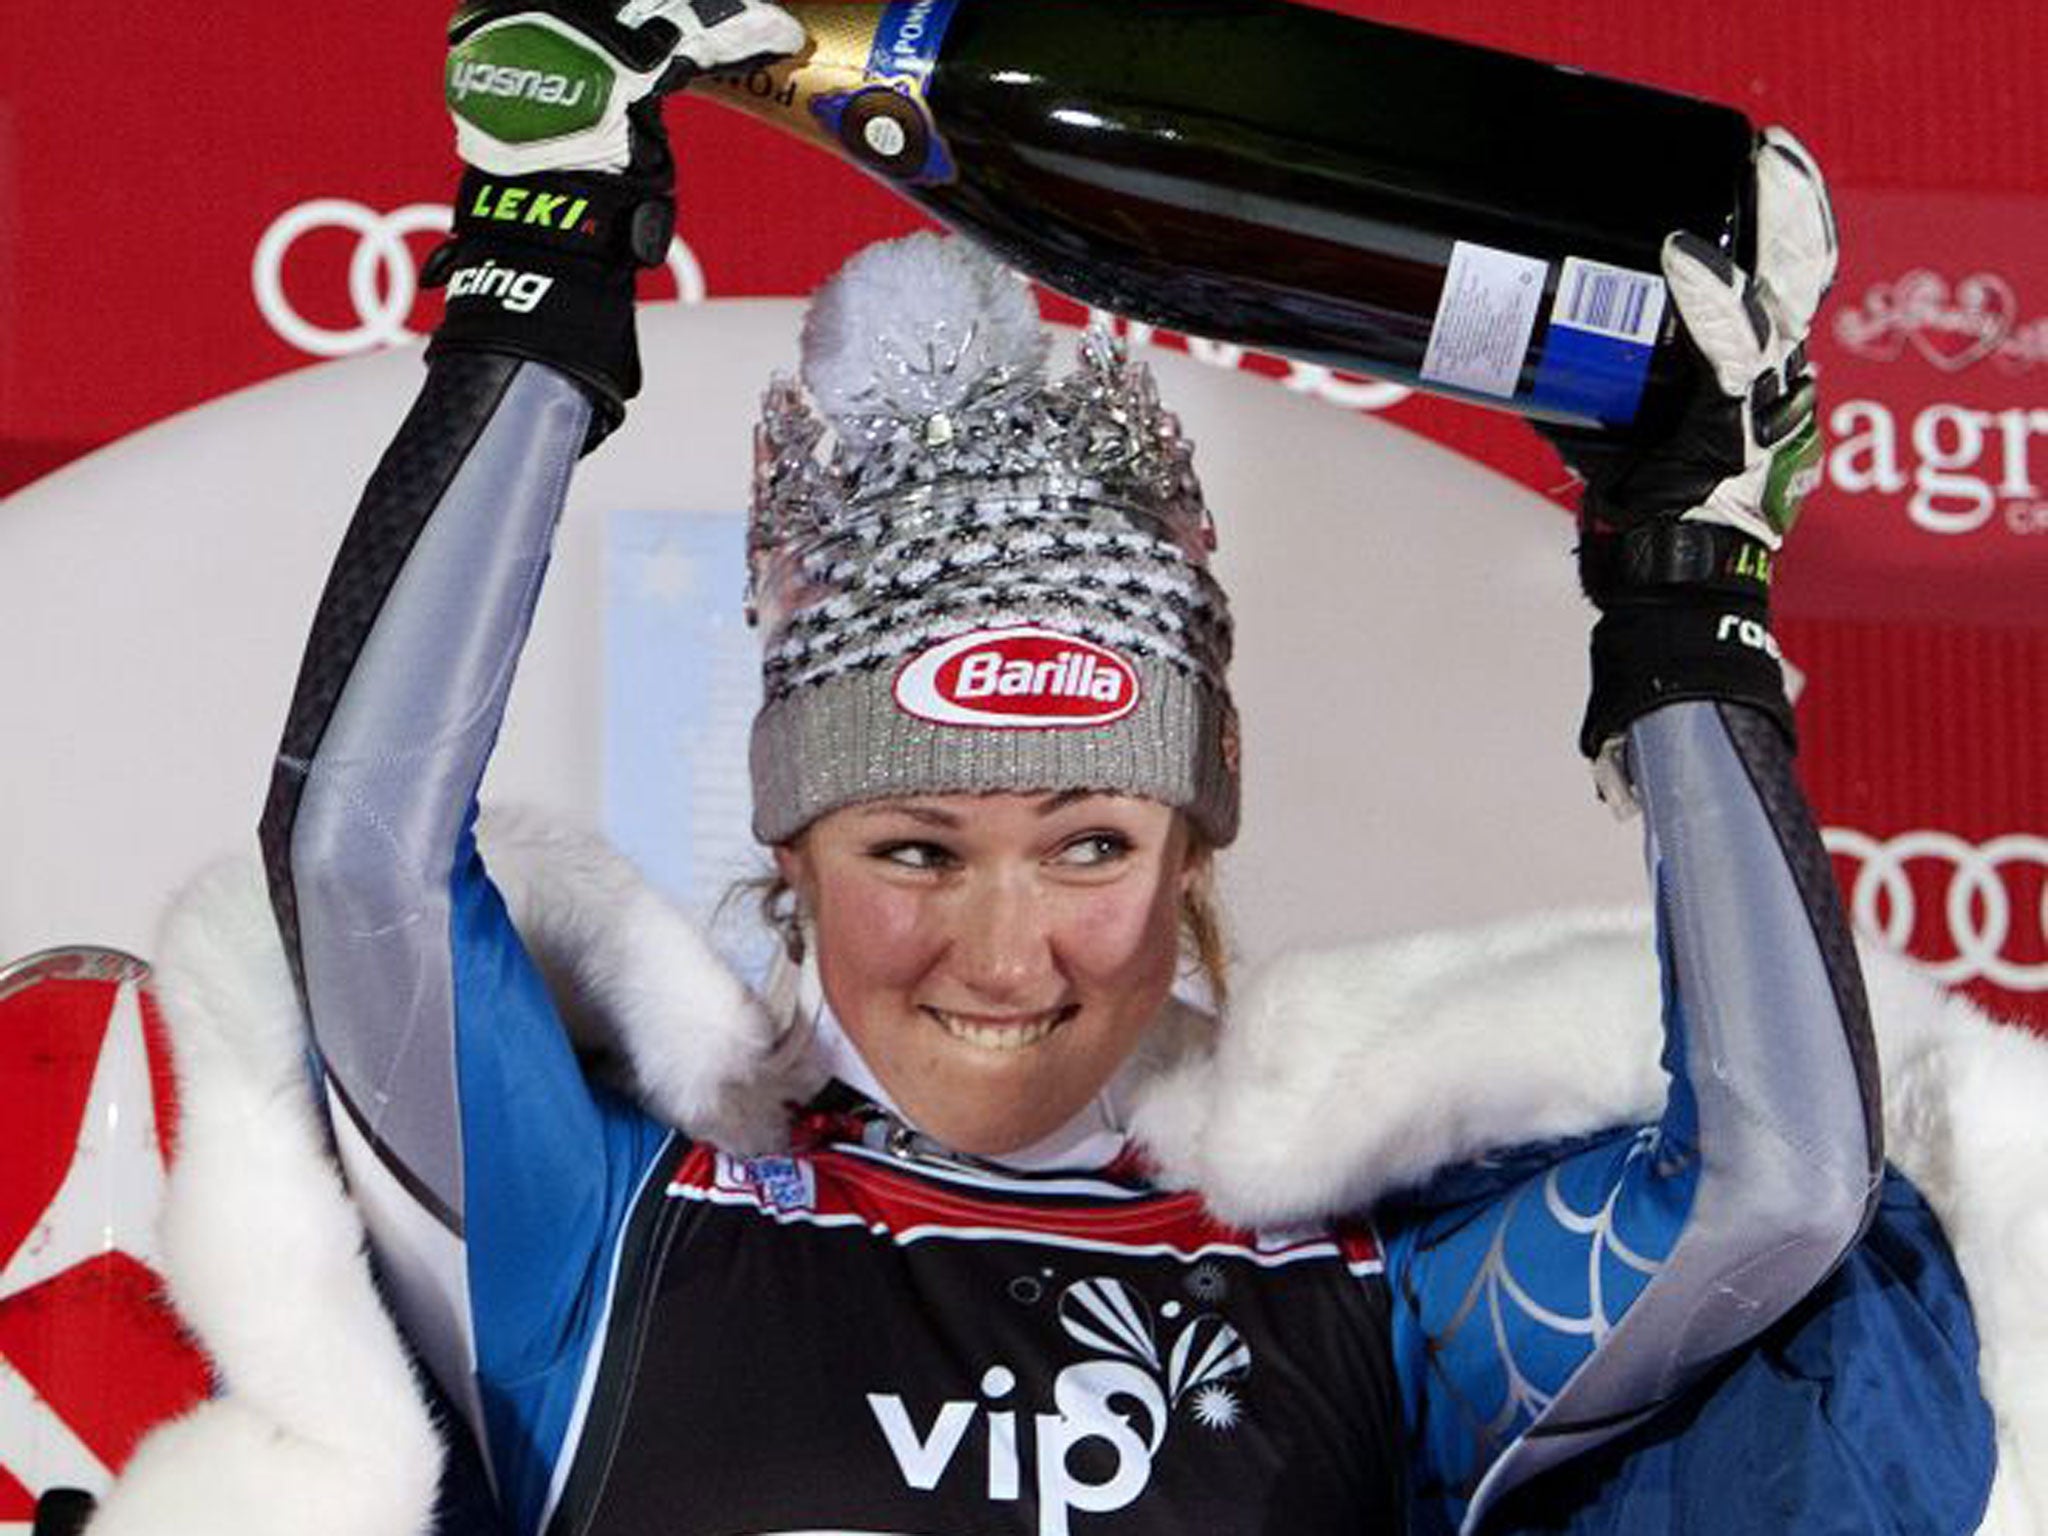 Mikaela Shiffrin won her third slalom of the season last week